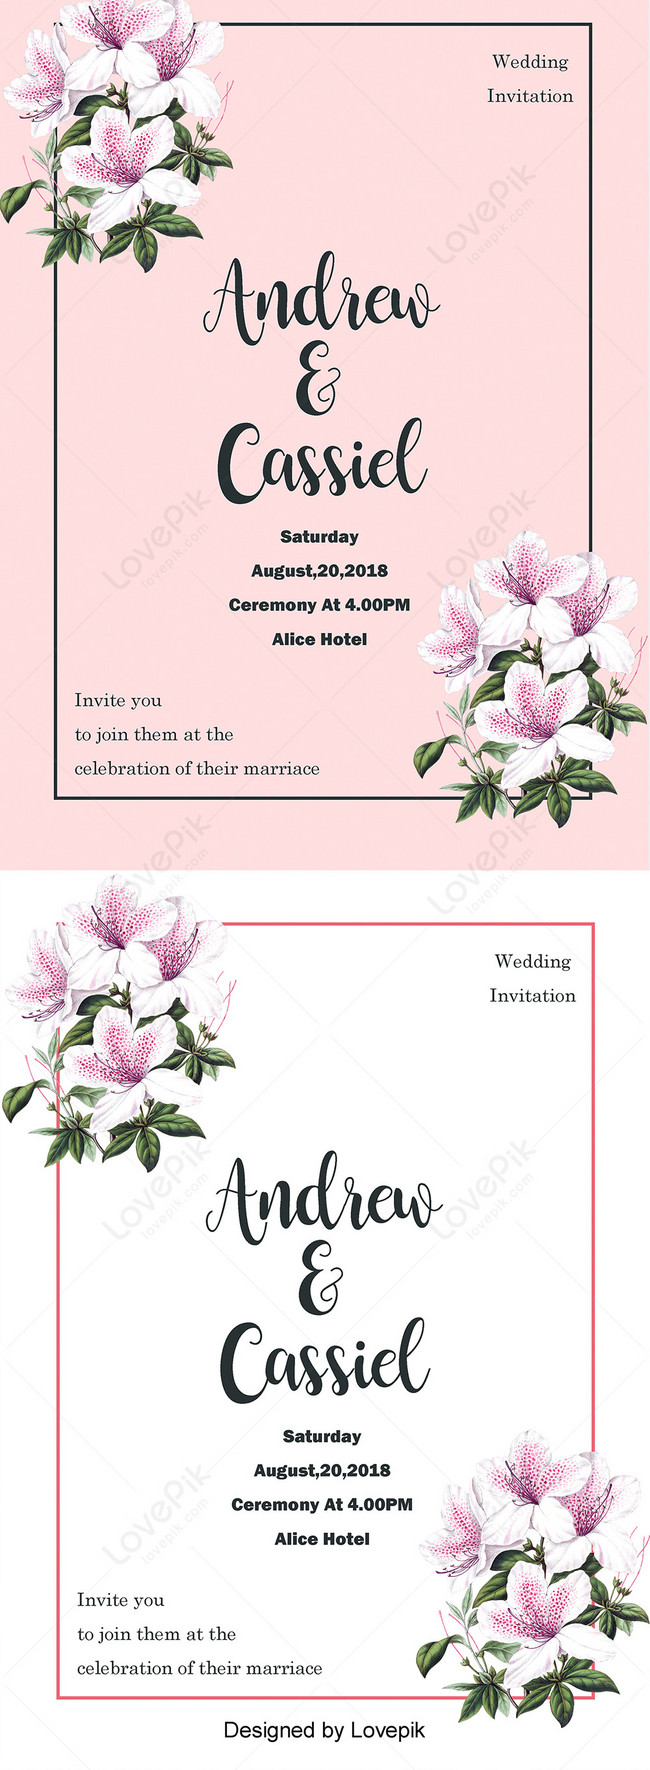 Template Undangan Pernikahan Bunga Gambar Unduh Gratis Templat 450000525 Format Gambar Psd Lovepik Com